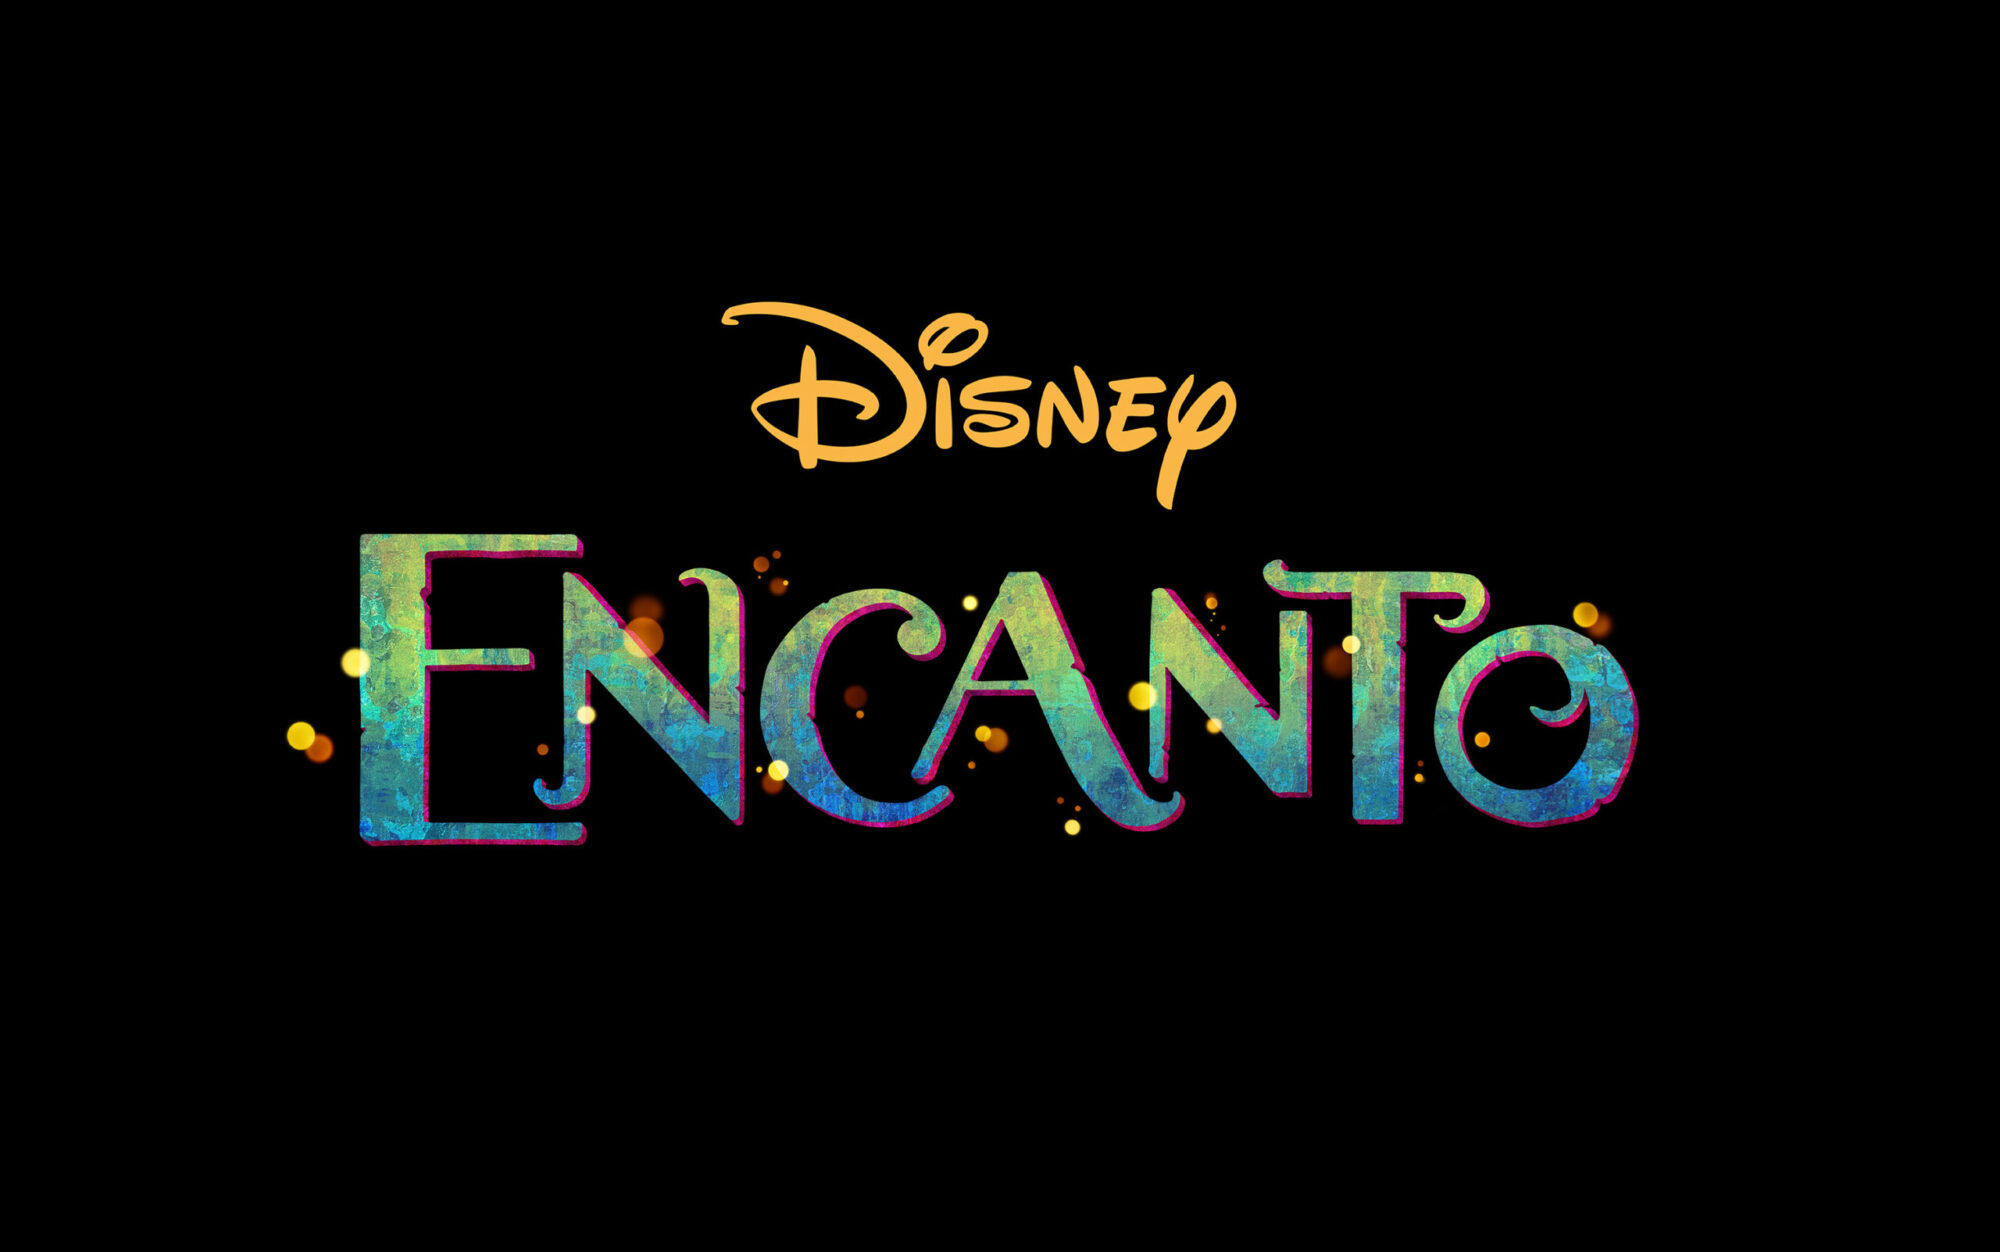 Buy Encanto Blu-rayDVD DIGITAL CODE Online Algeria